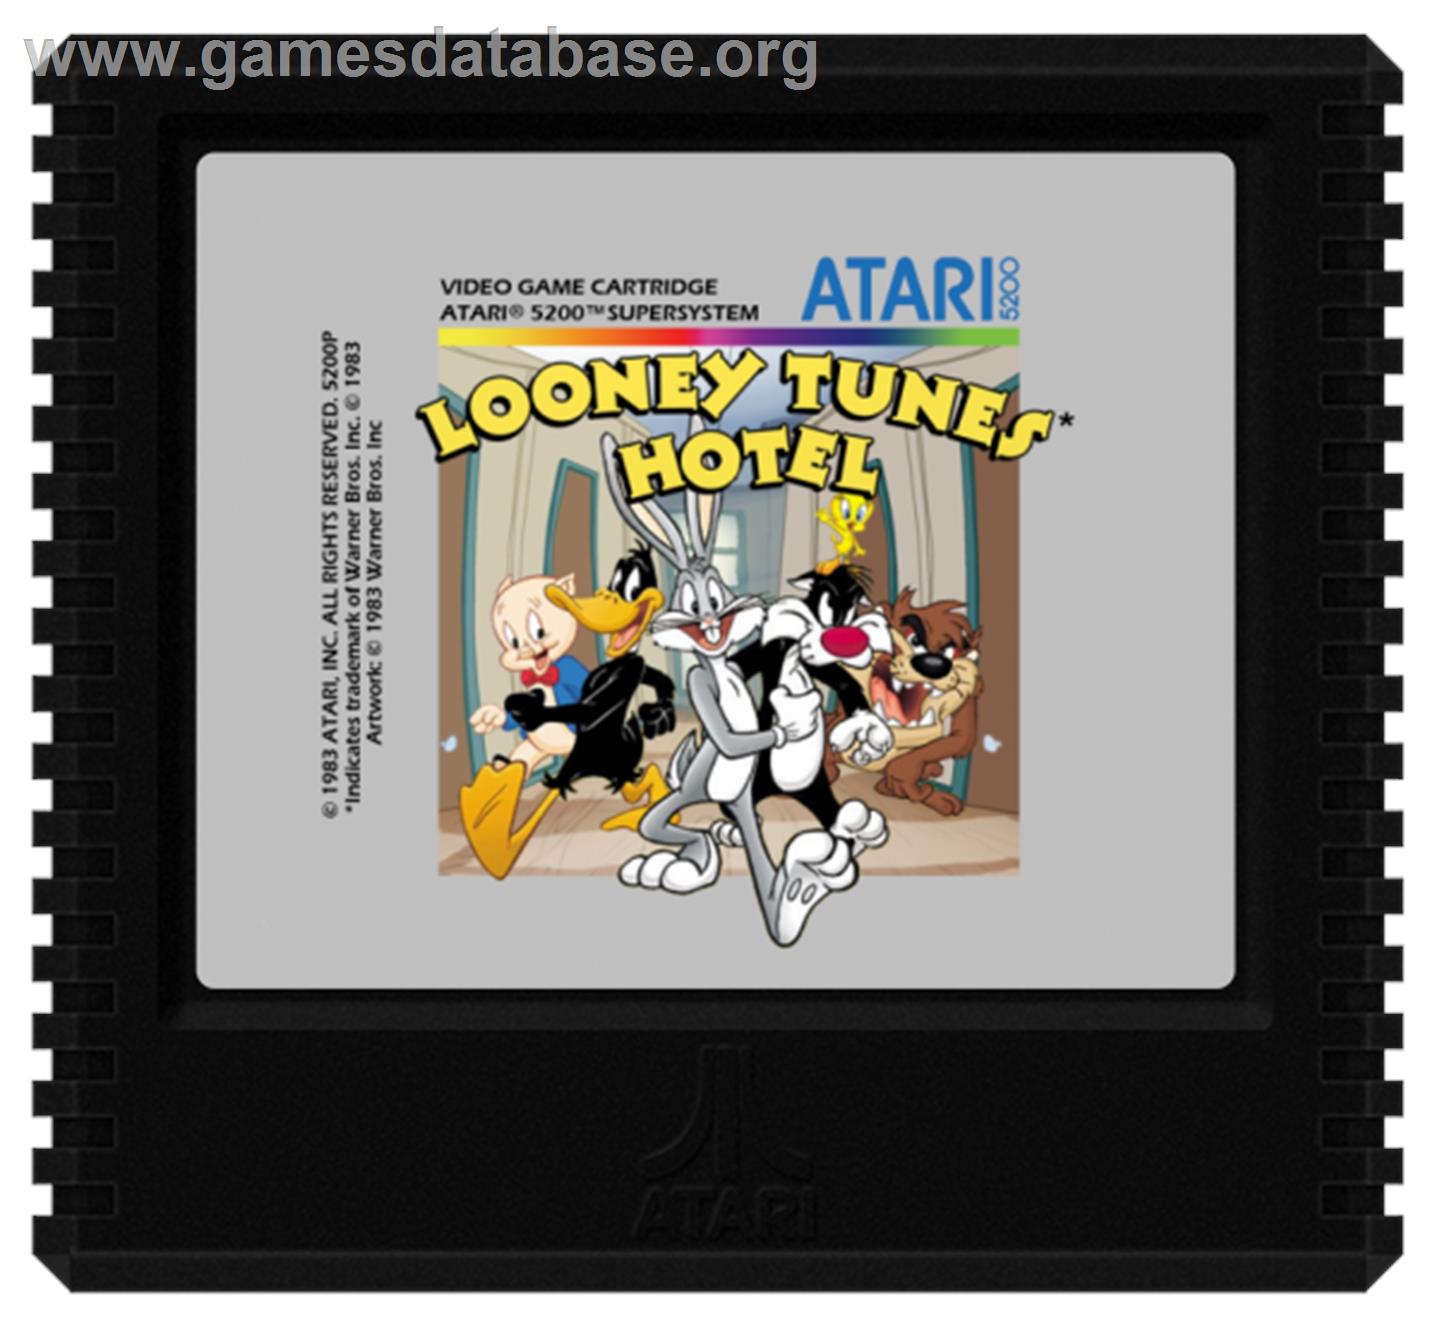 Looney Tunes Hotel - Atari 5200 - Artwork - Cartridge